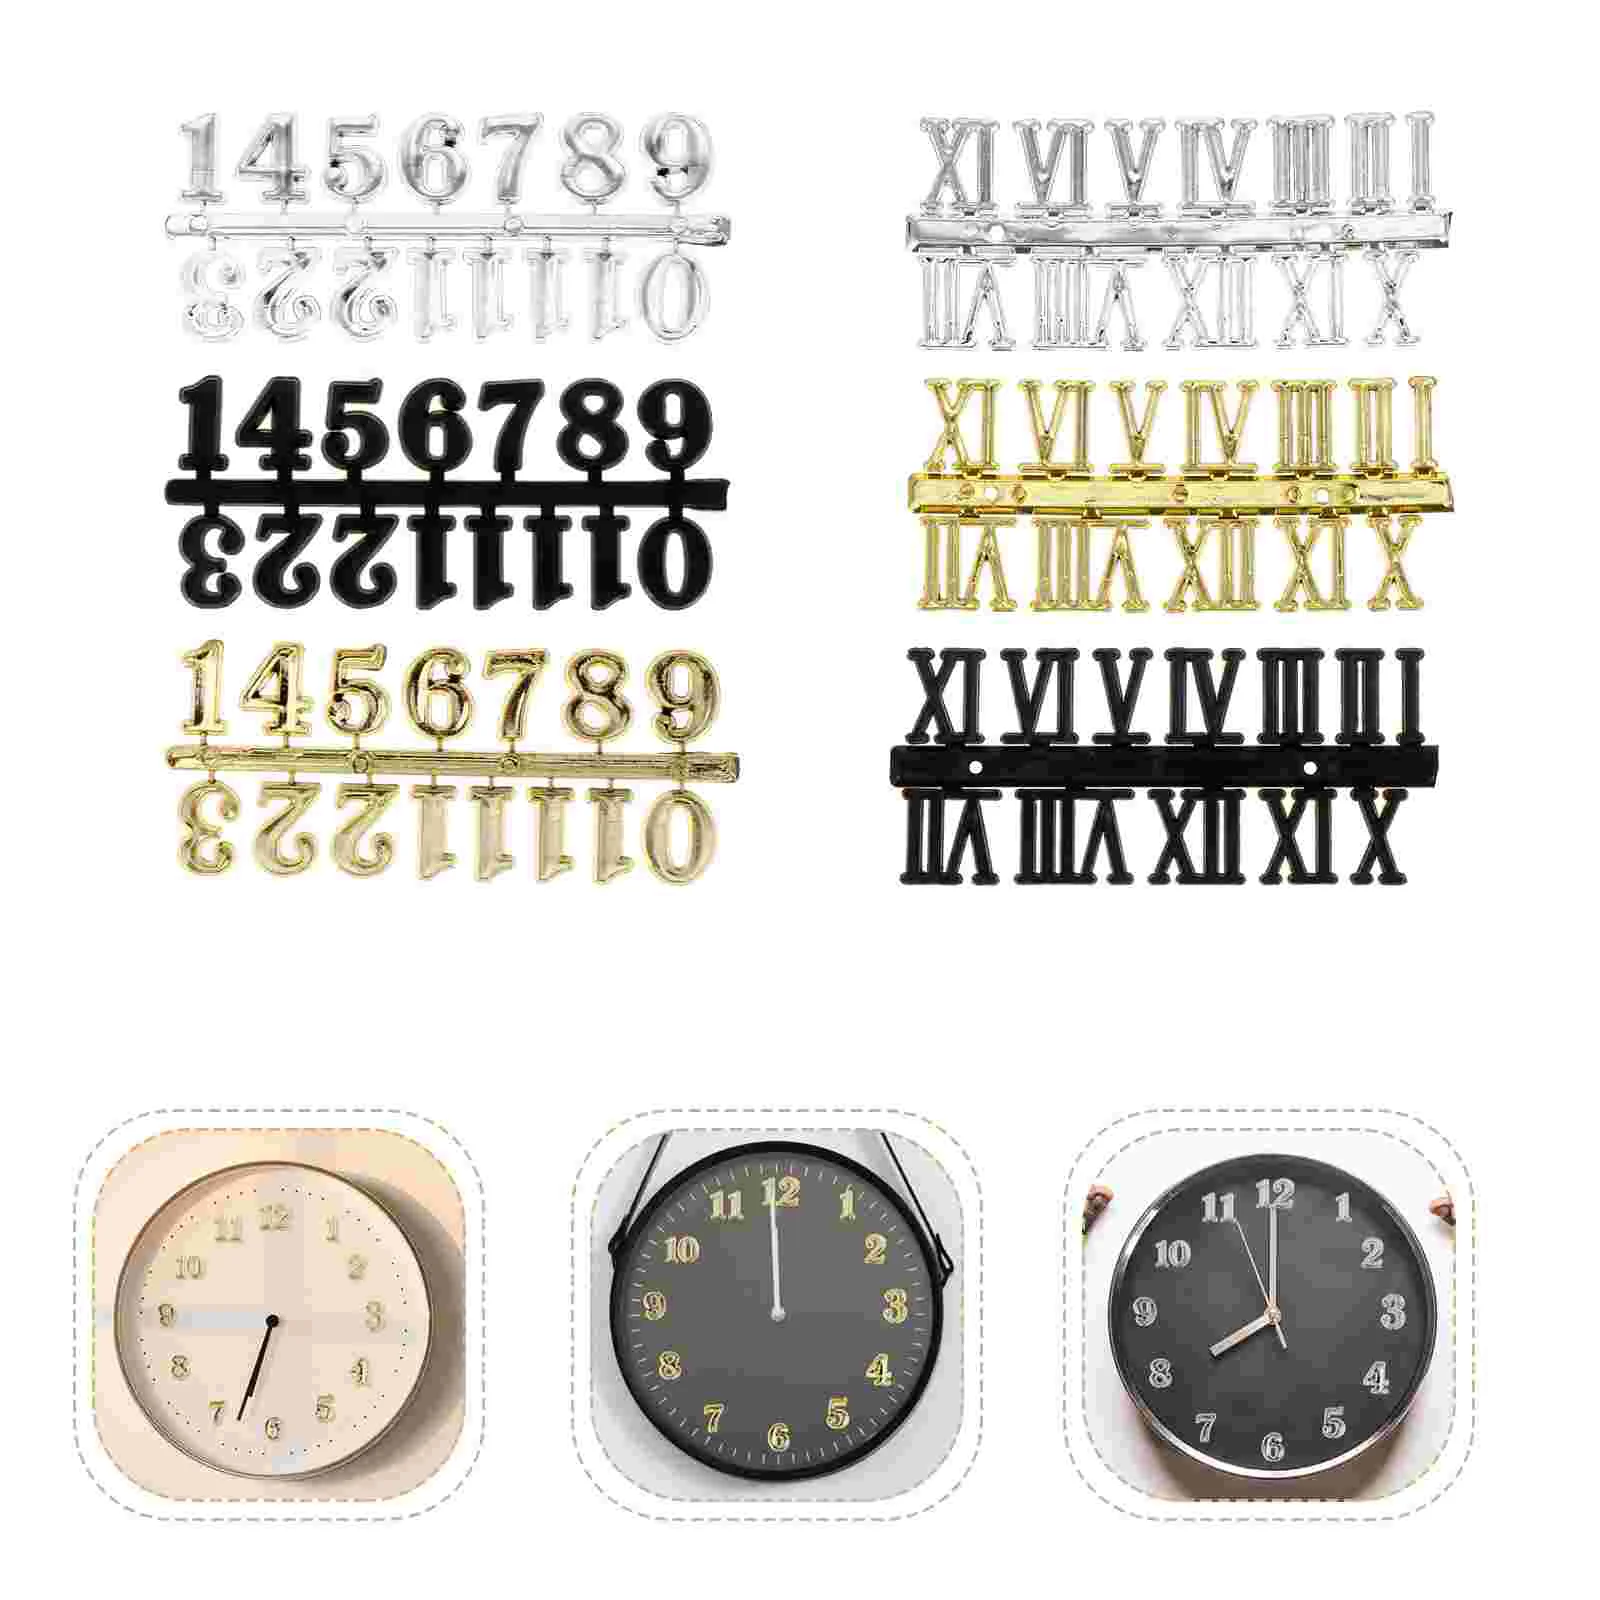 

6 Pcs Wall Clock Accessories Roman Number Alphabet Stickers Replacement Parts Digital Repairing DIY